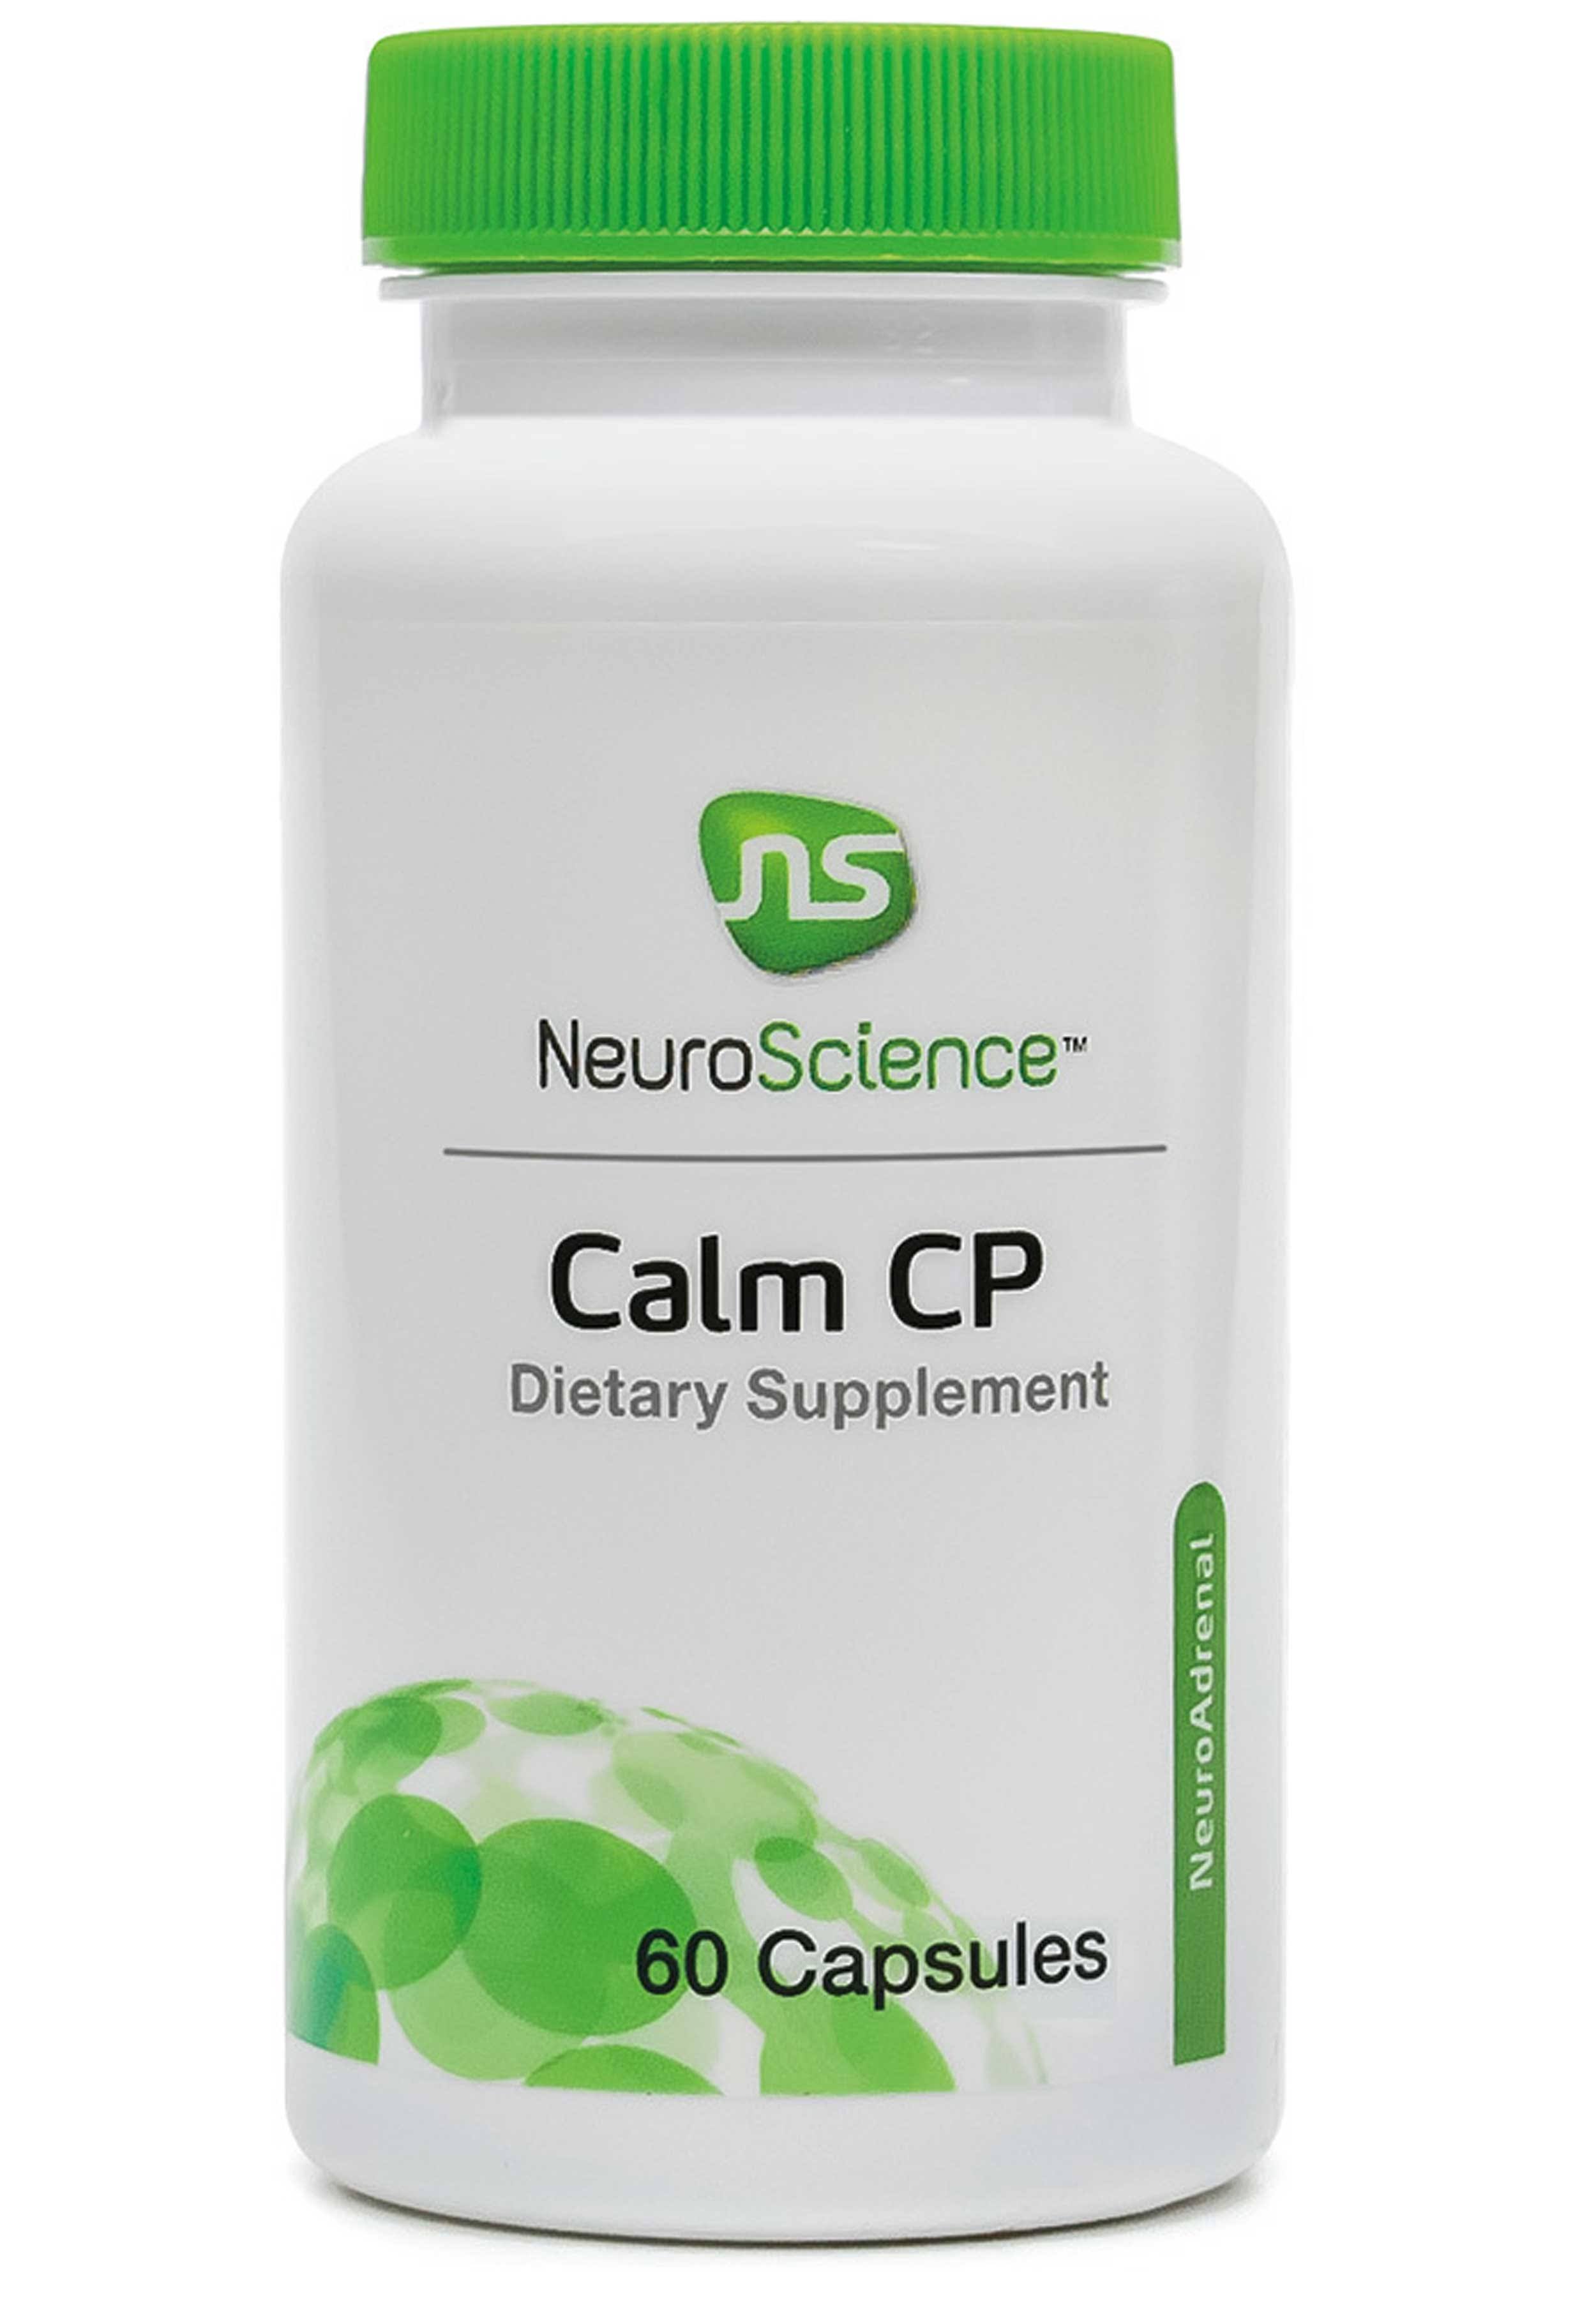 Neuroscience Health Care Calm CP Capsules Supplement - 60ct